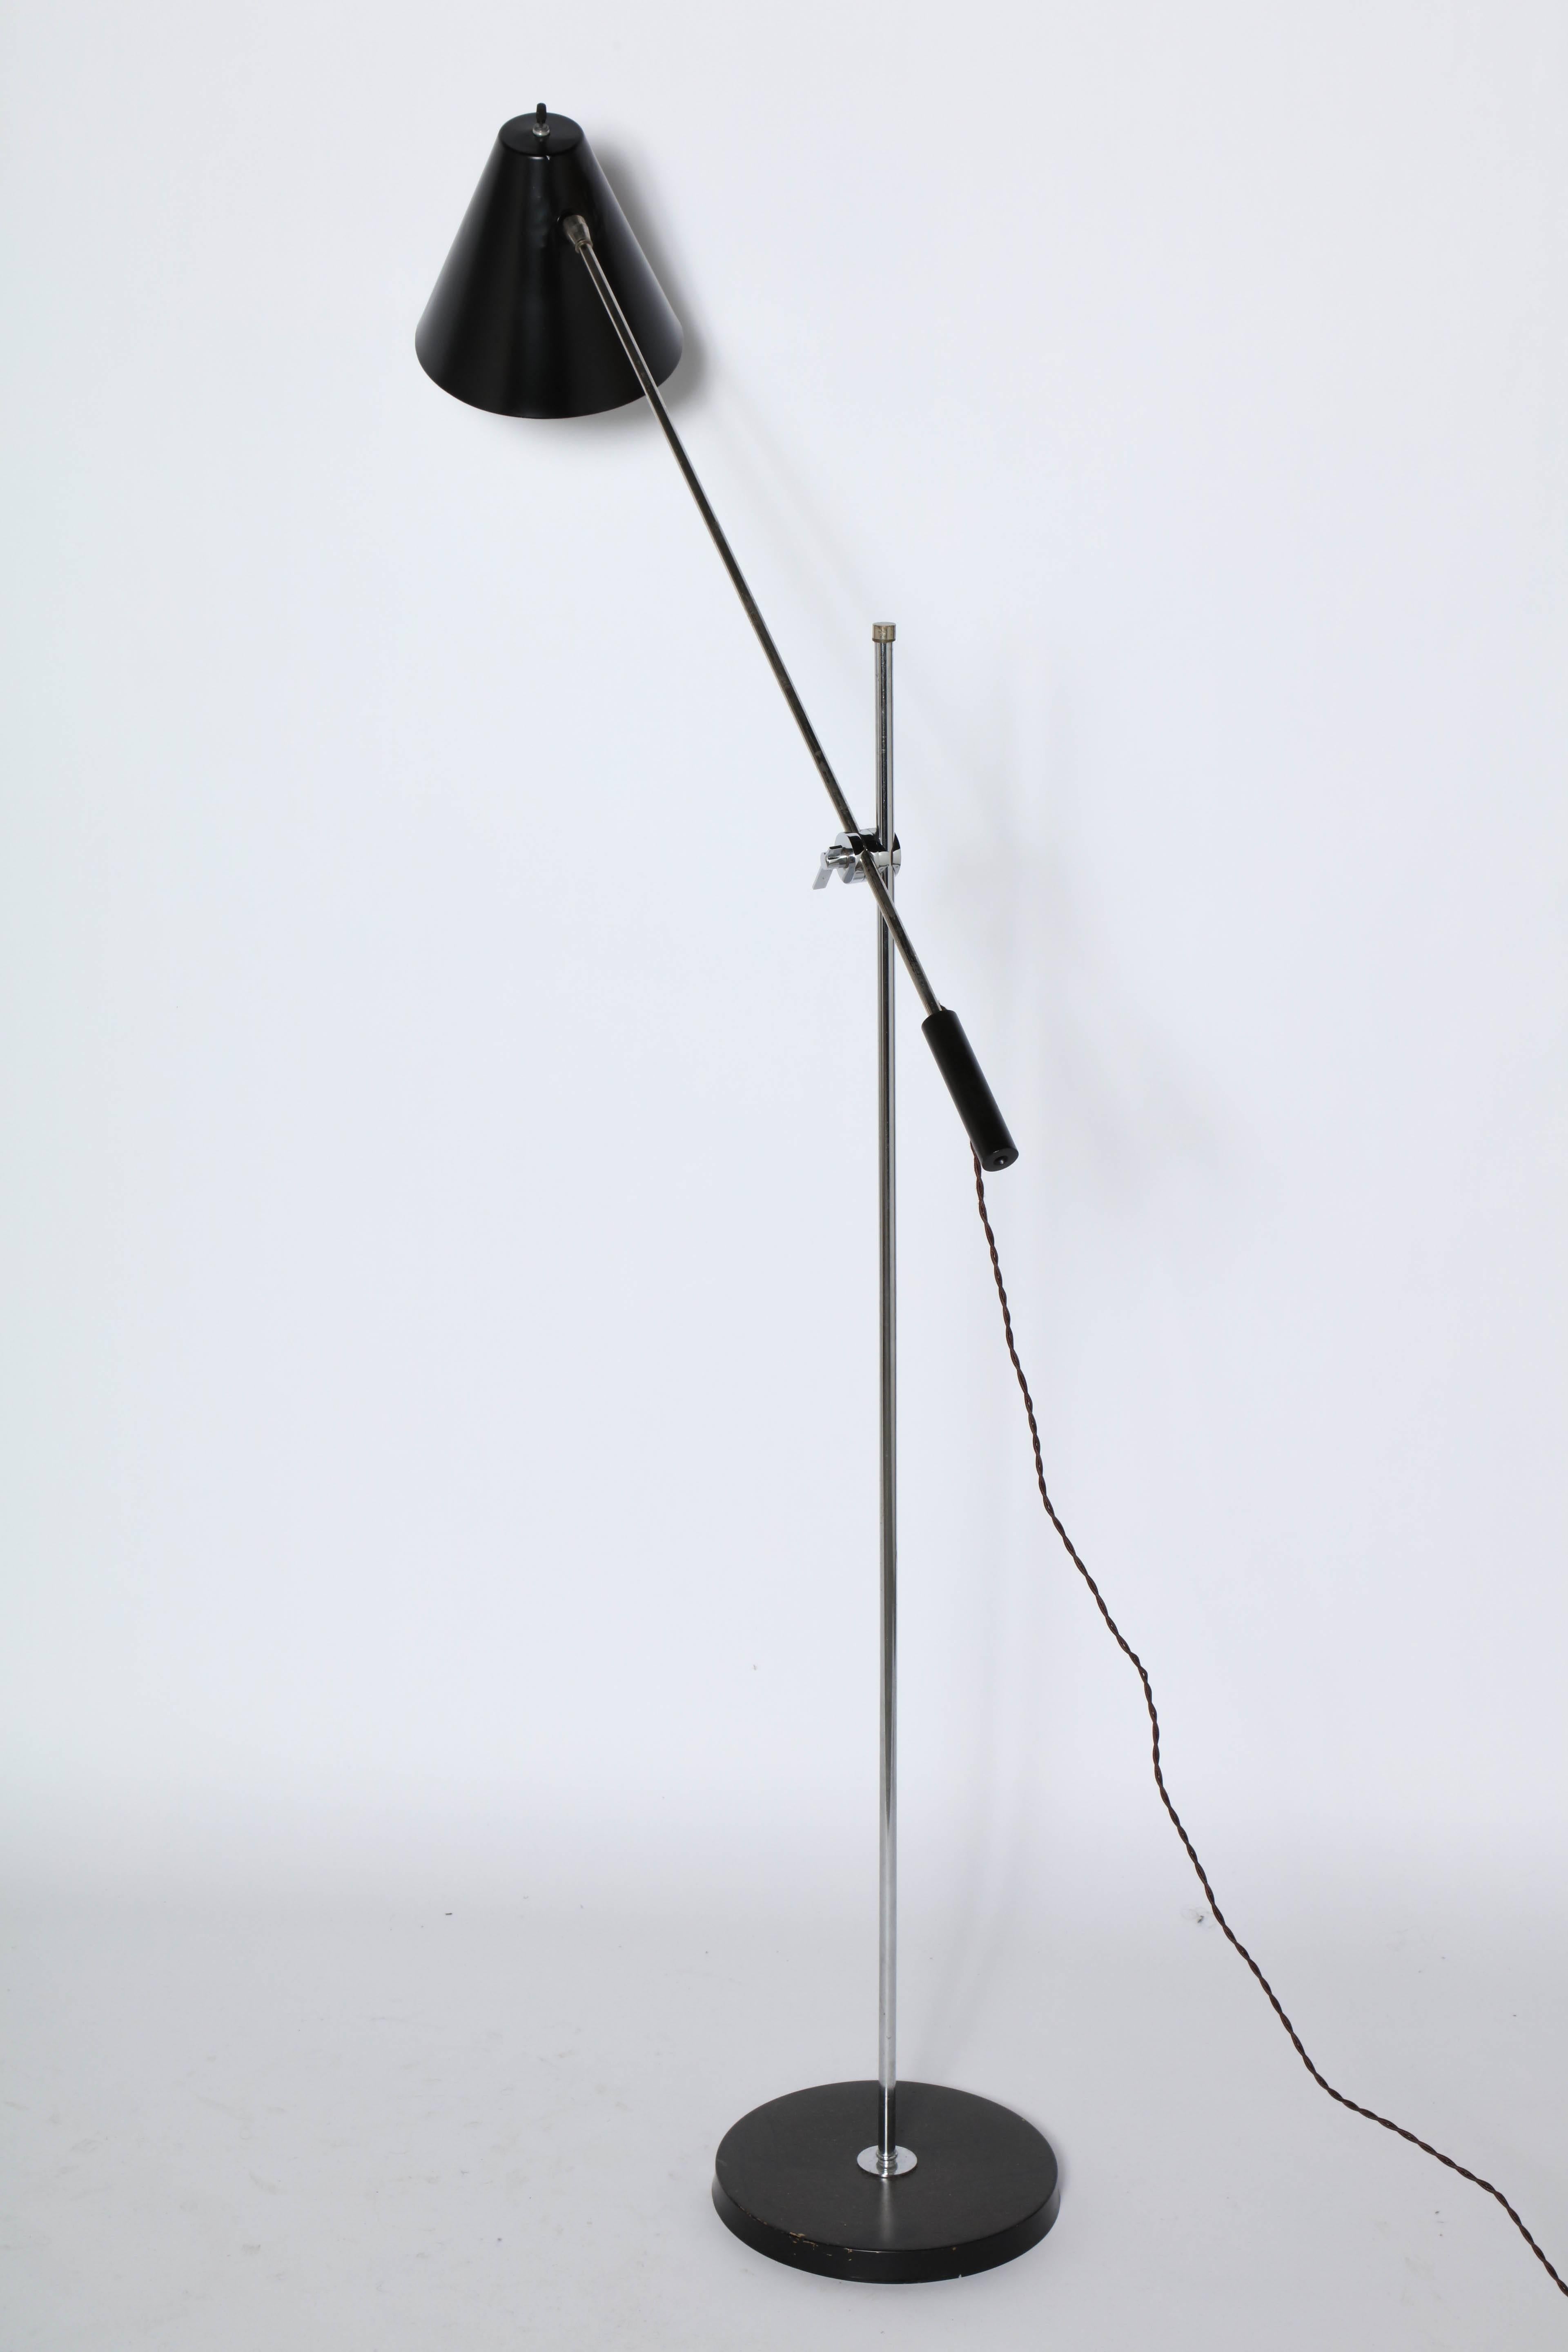 Aluminum Laurel Lamp Co. Adjustable Chrome Floor Lamp with Black Enamel Shade, 1960s